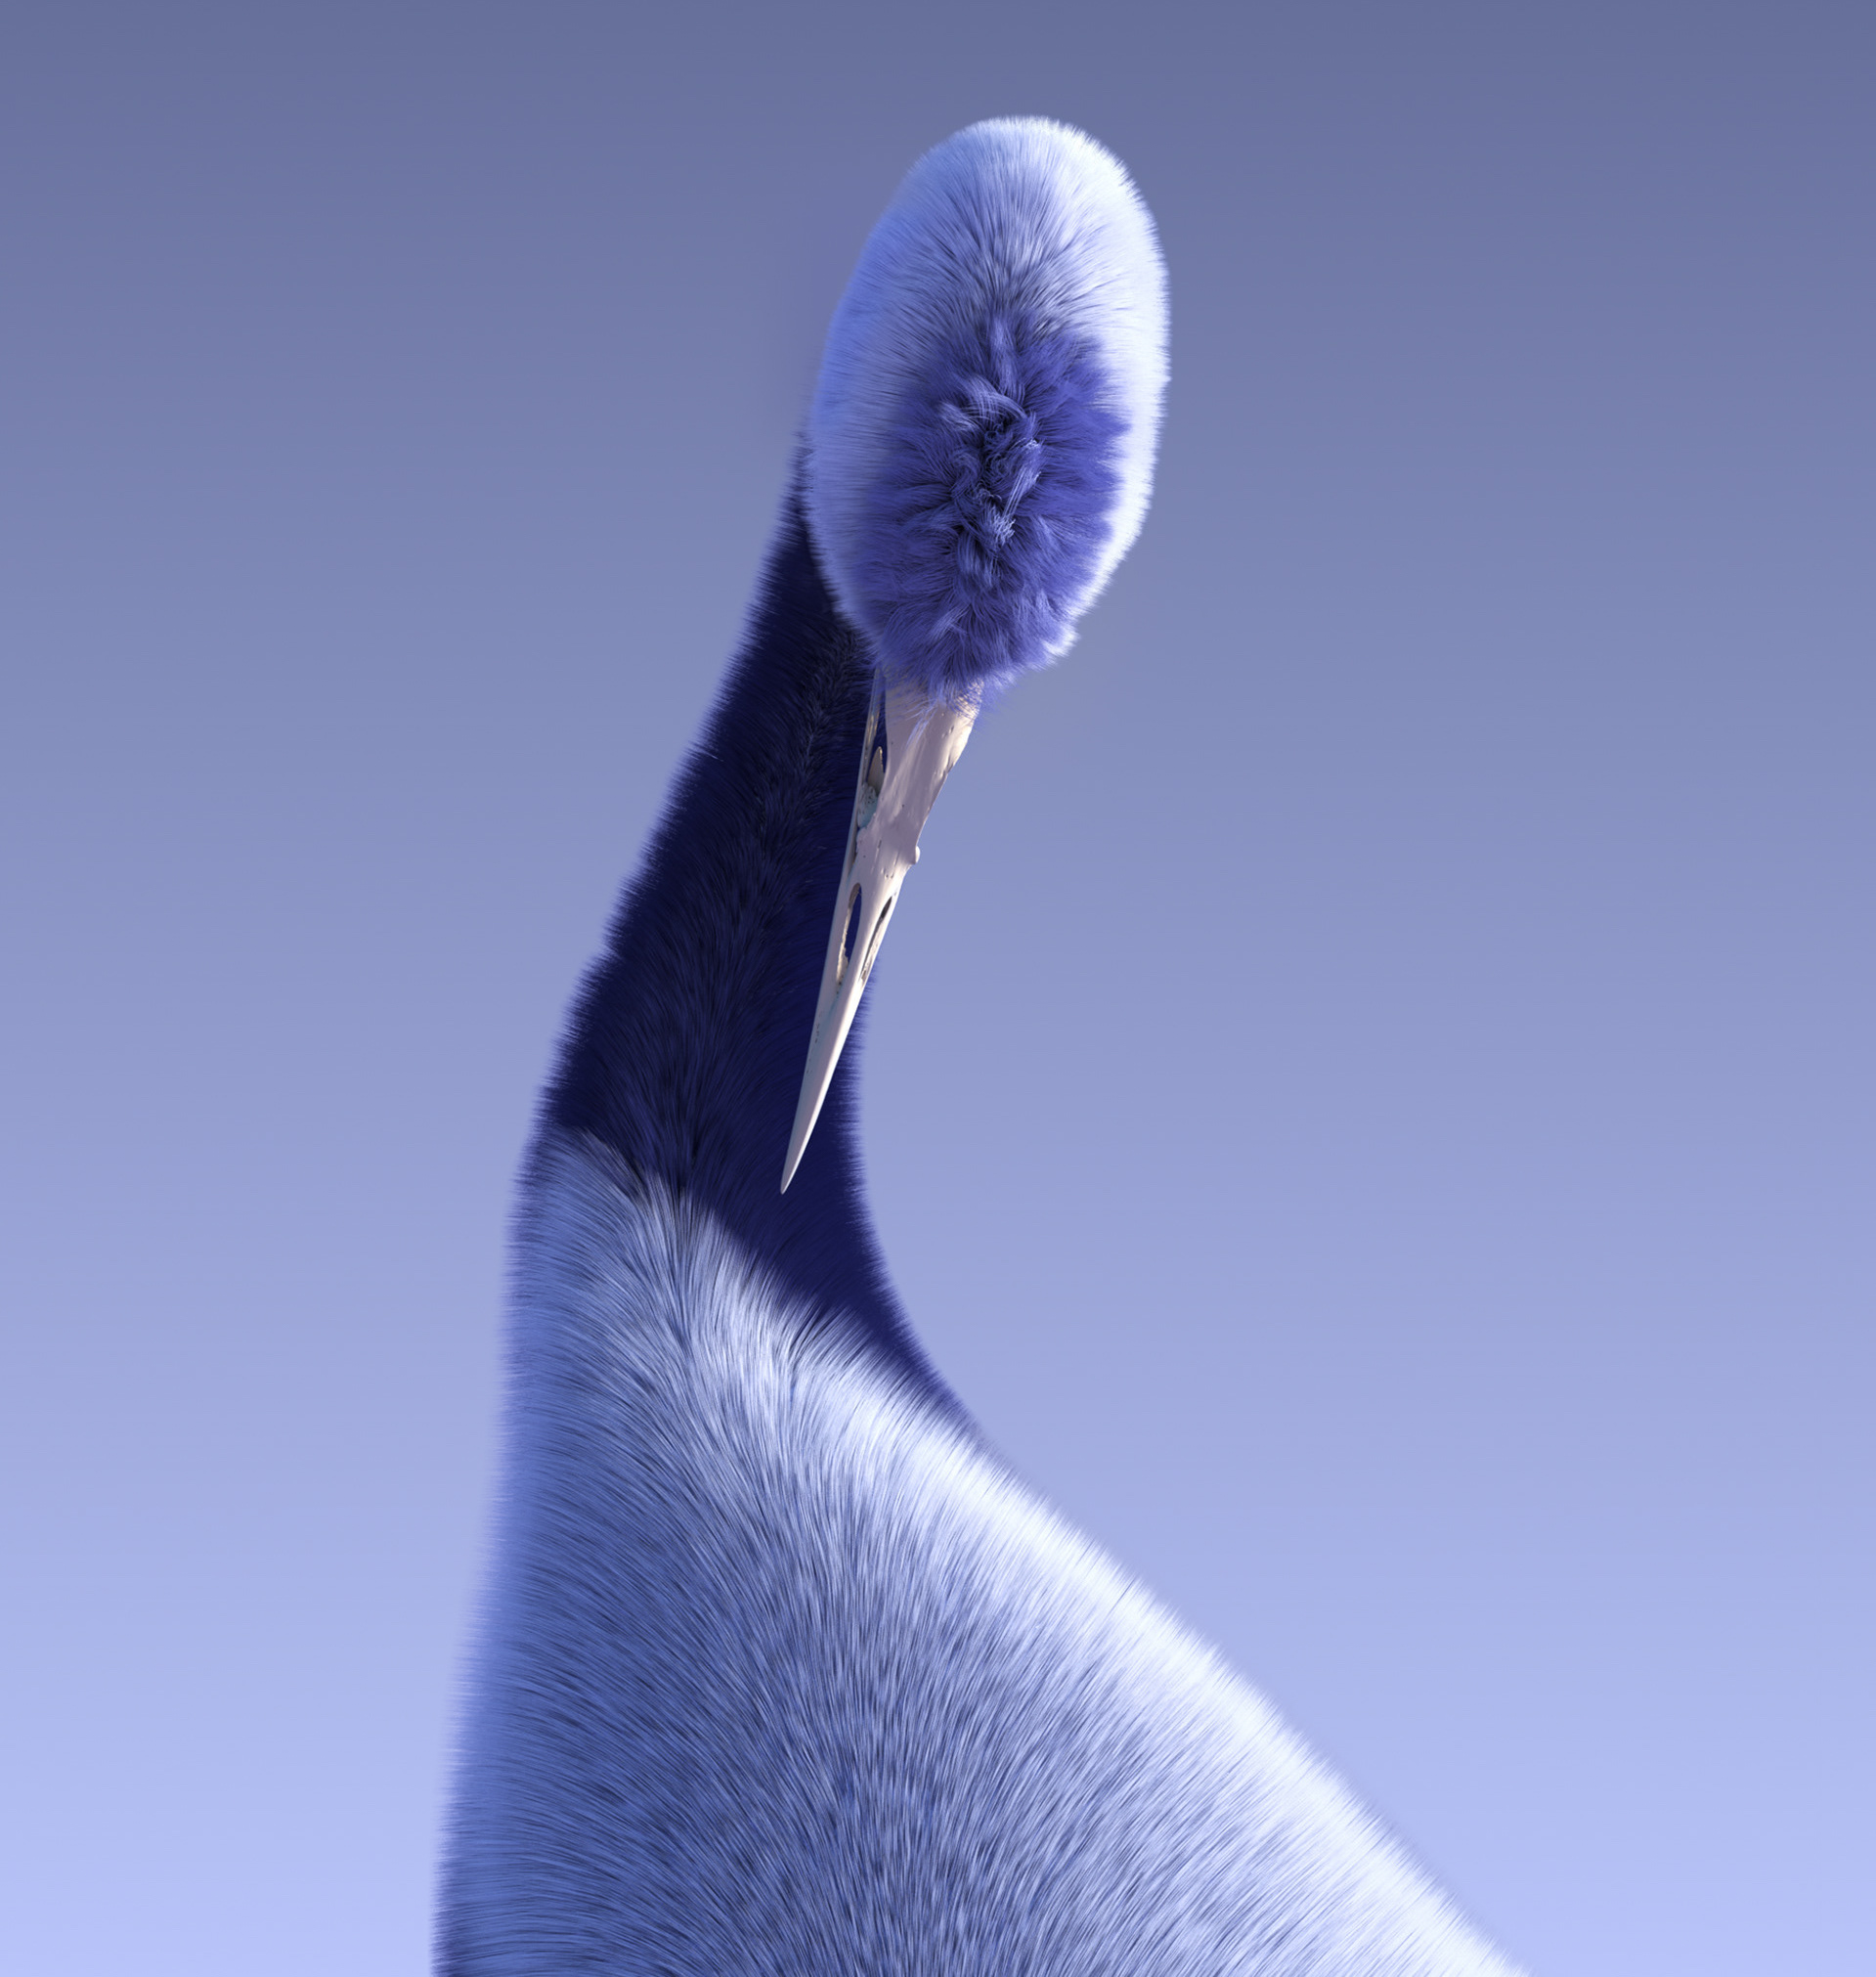 Hairy birds by 3D artist Youmi